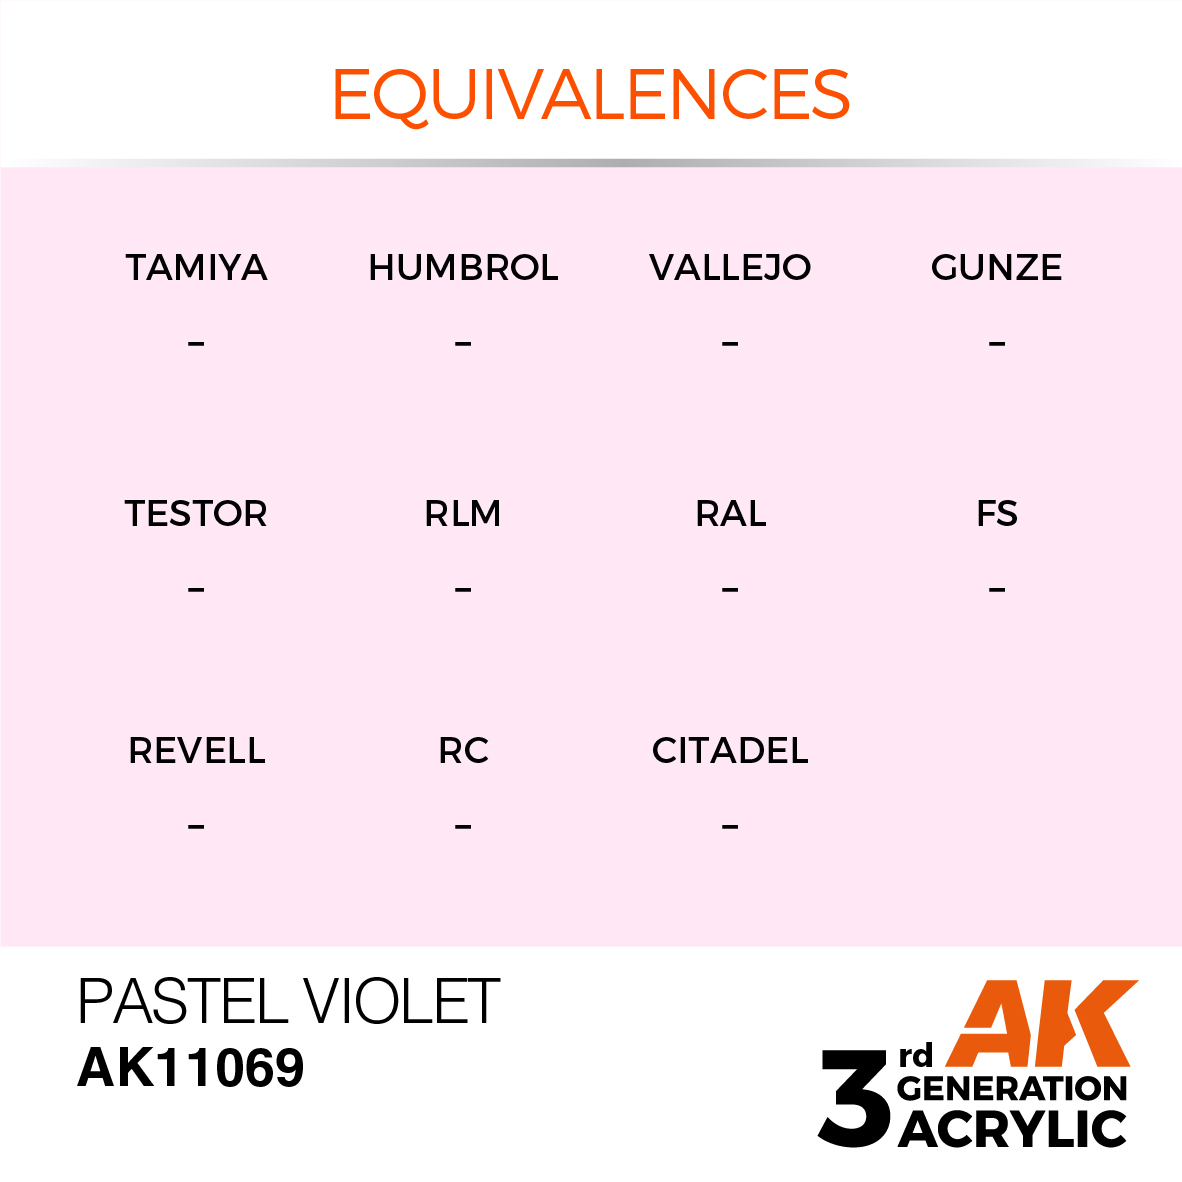 AK11069 Pastel Violet (3rd-Generation) (17mL)